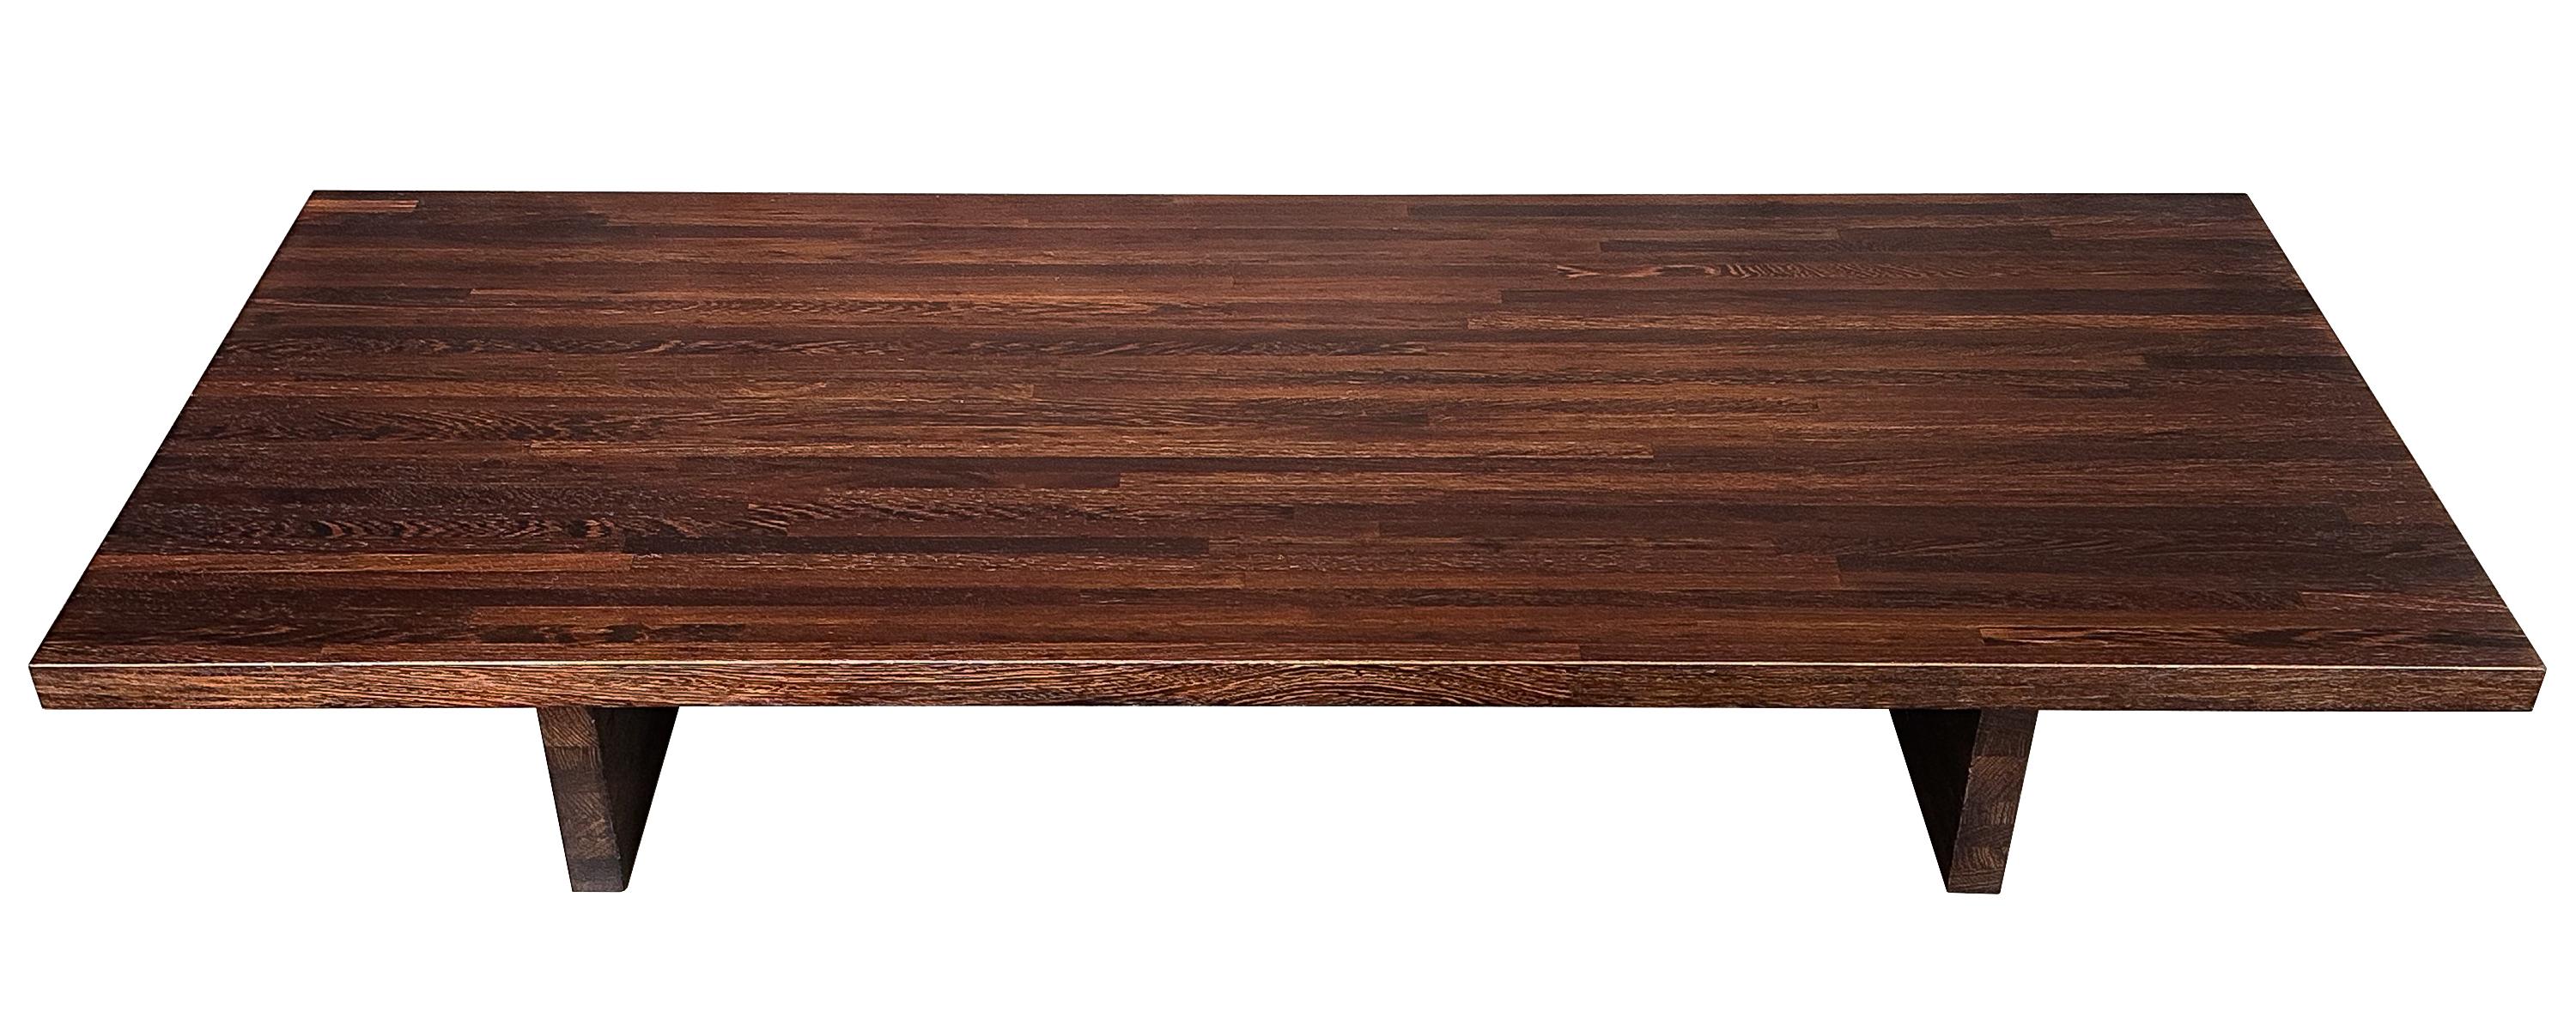 Belge Table basse moderne et minimaliste en bois de wengé massif en vente